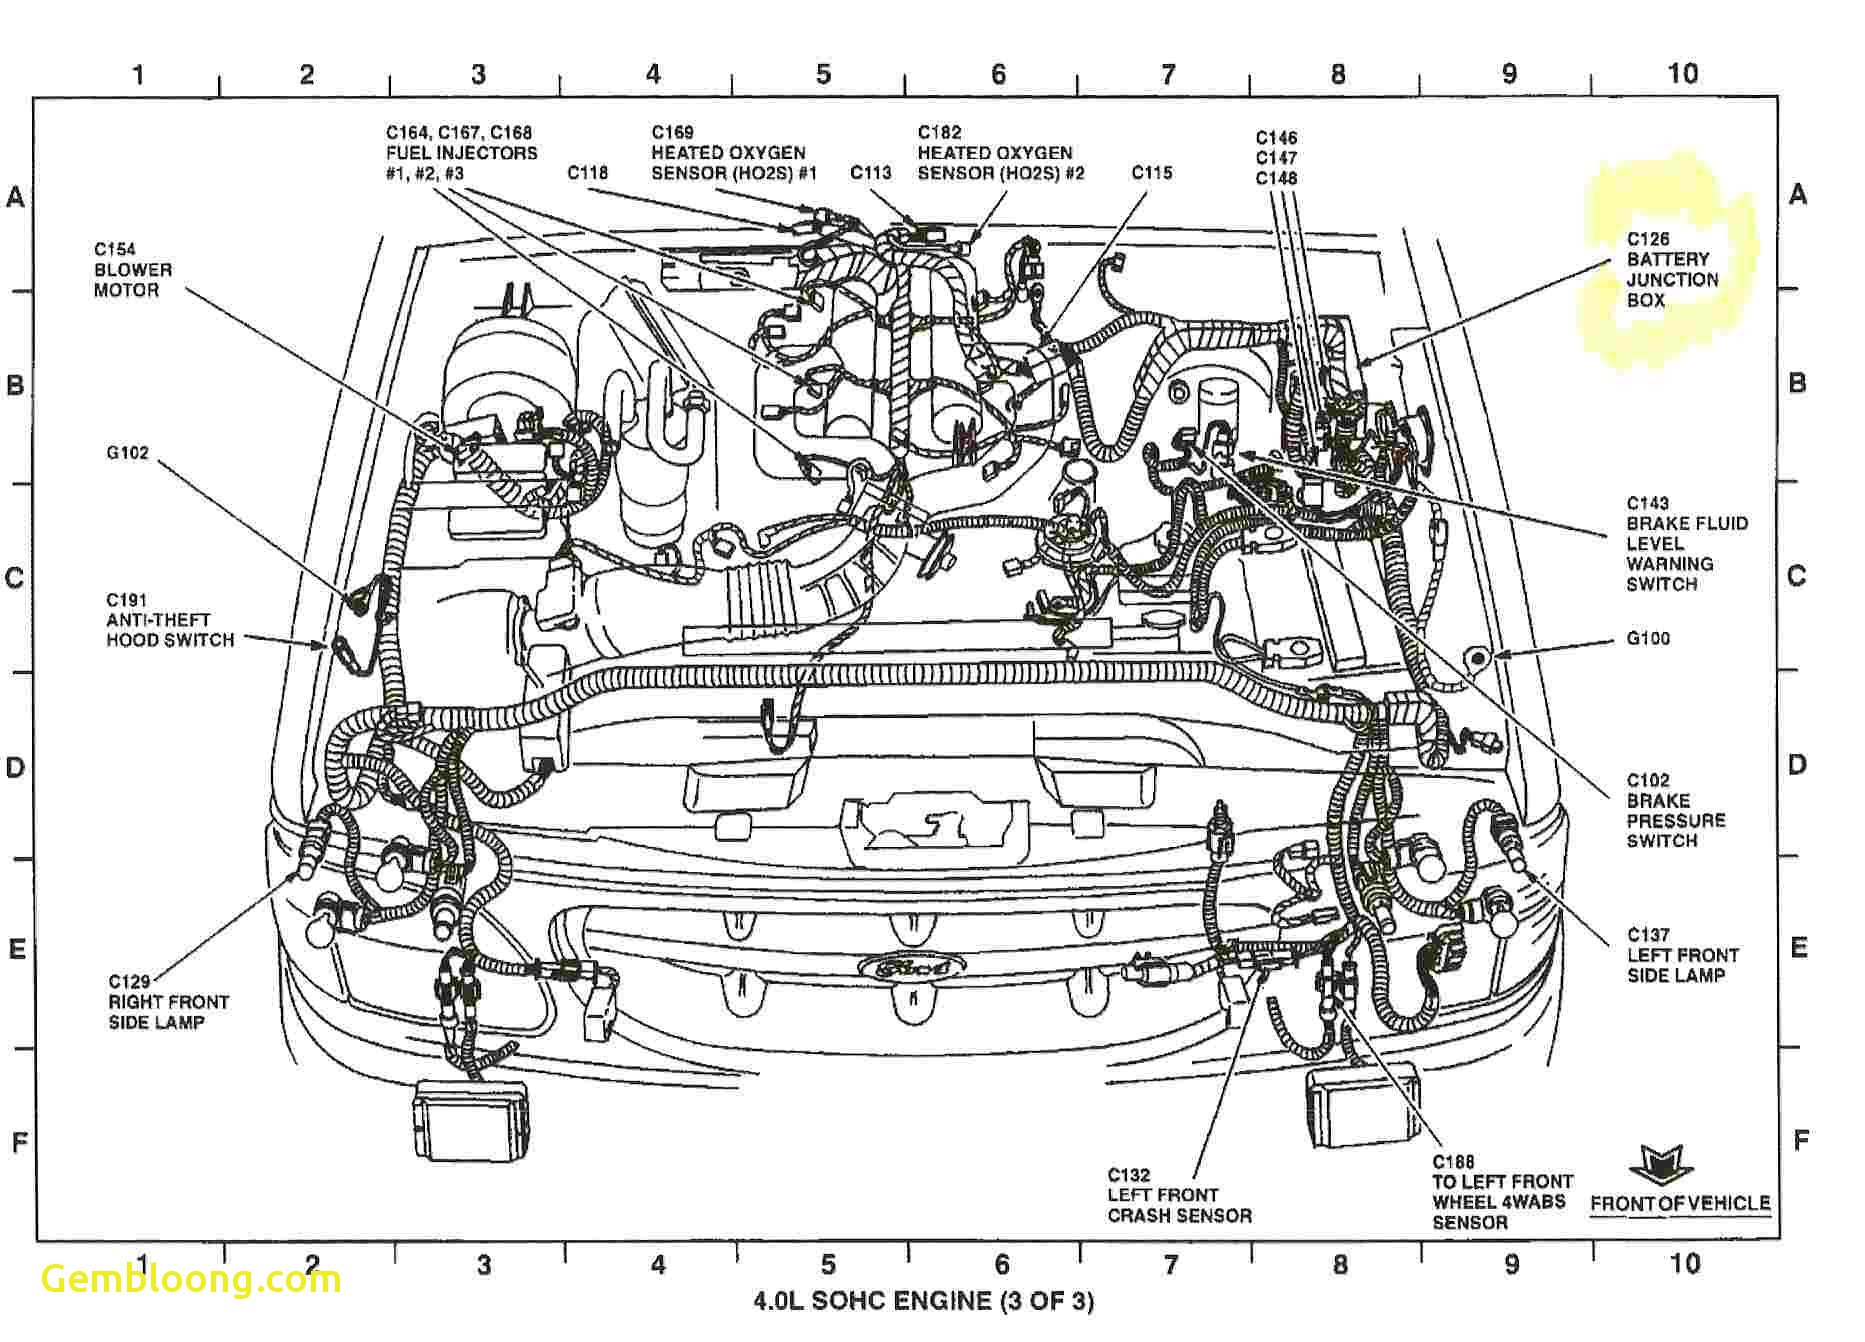 2001 ford Focus Engine Diagram 2001 ford 4 0l Engine Diagram Wiring Diagram Database Of 2001 ford Focus Engine Diagram